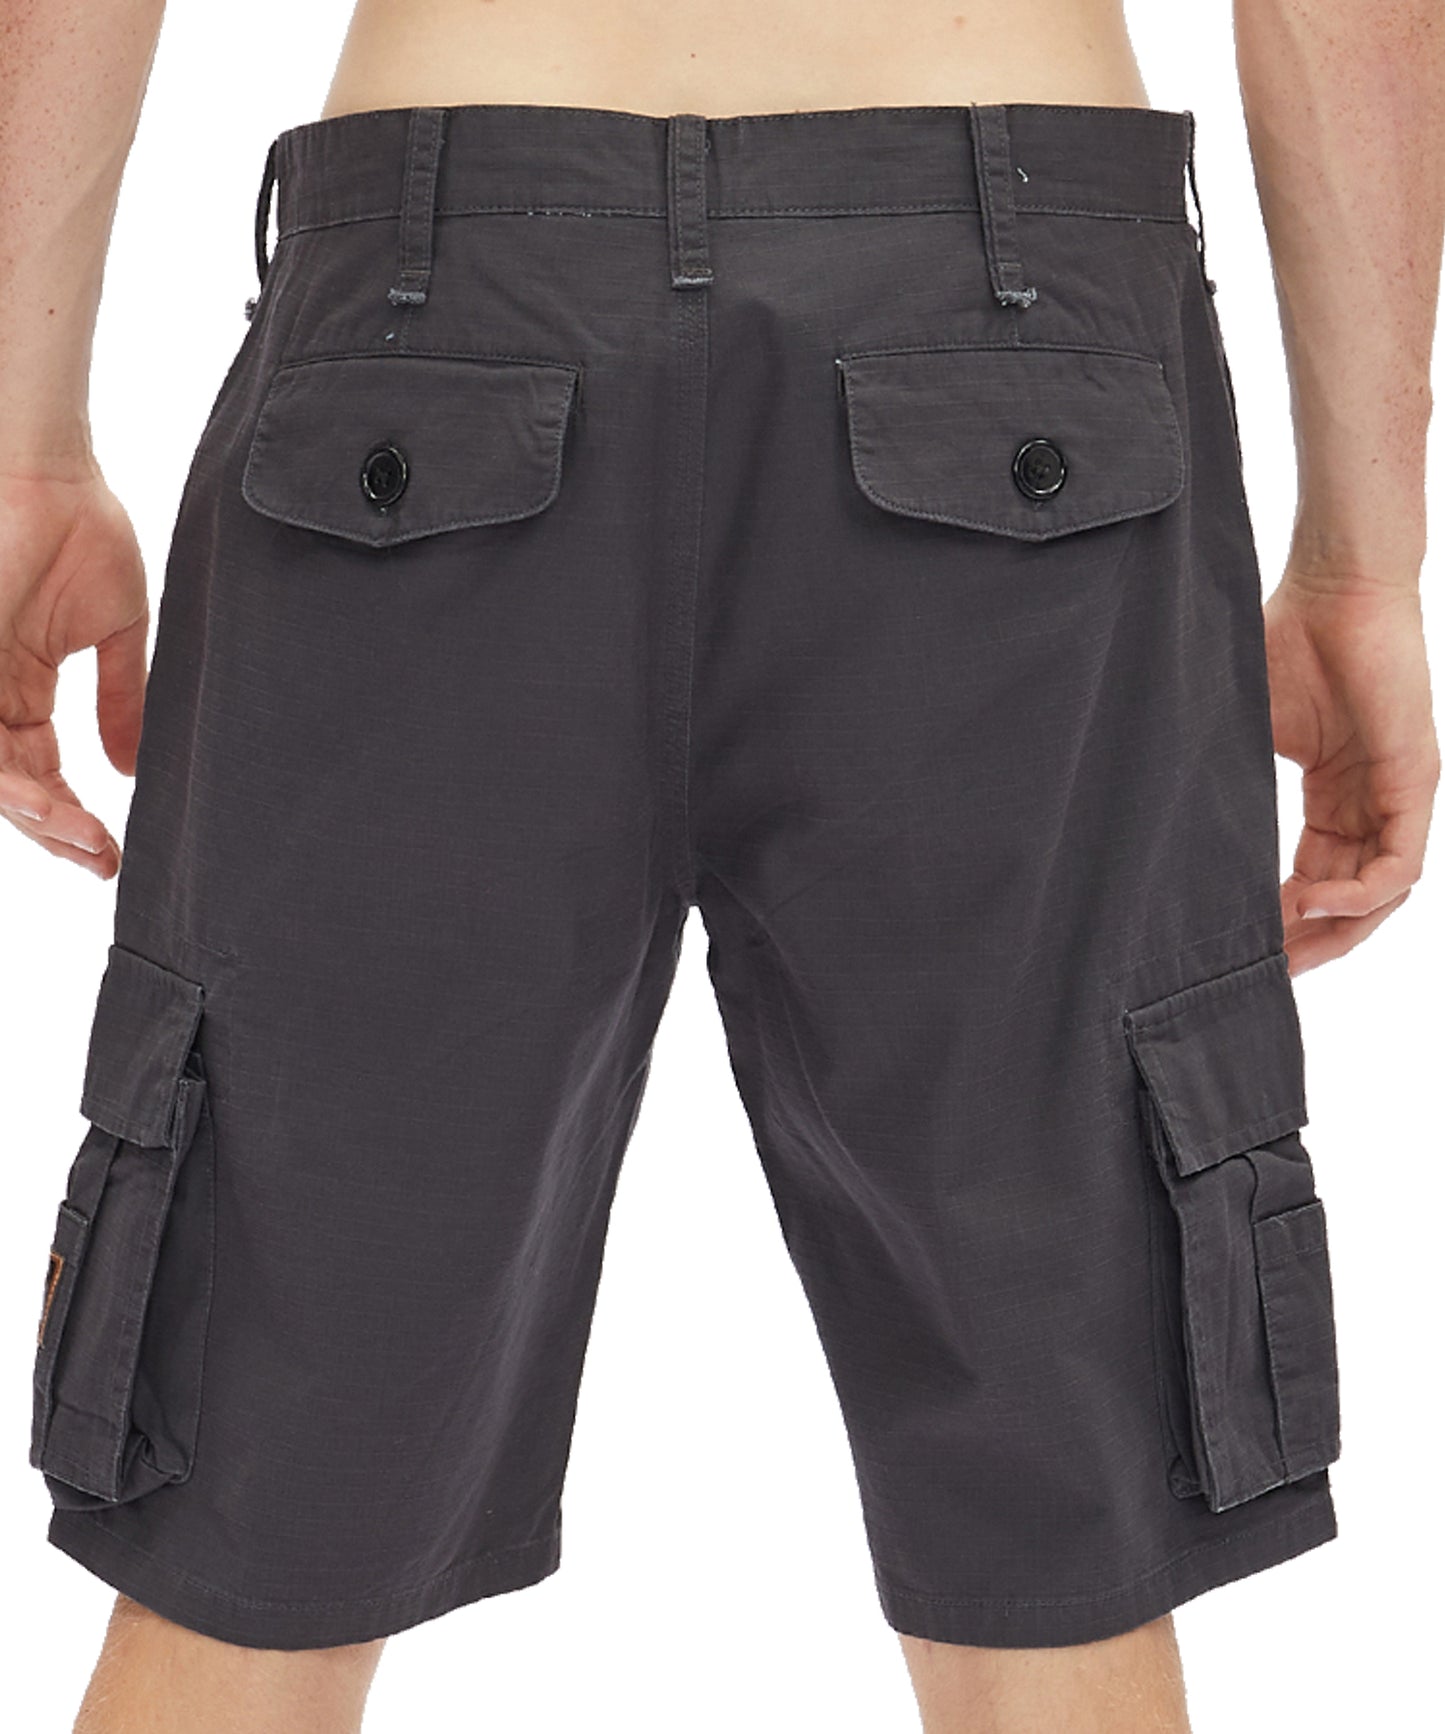 hydroponic-pantalón-corto-clover-rs-pirate-varios-bolsillos-color-negro-prenda-lavada.